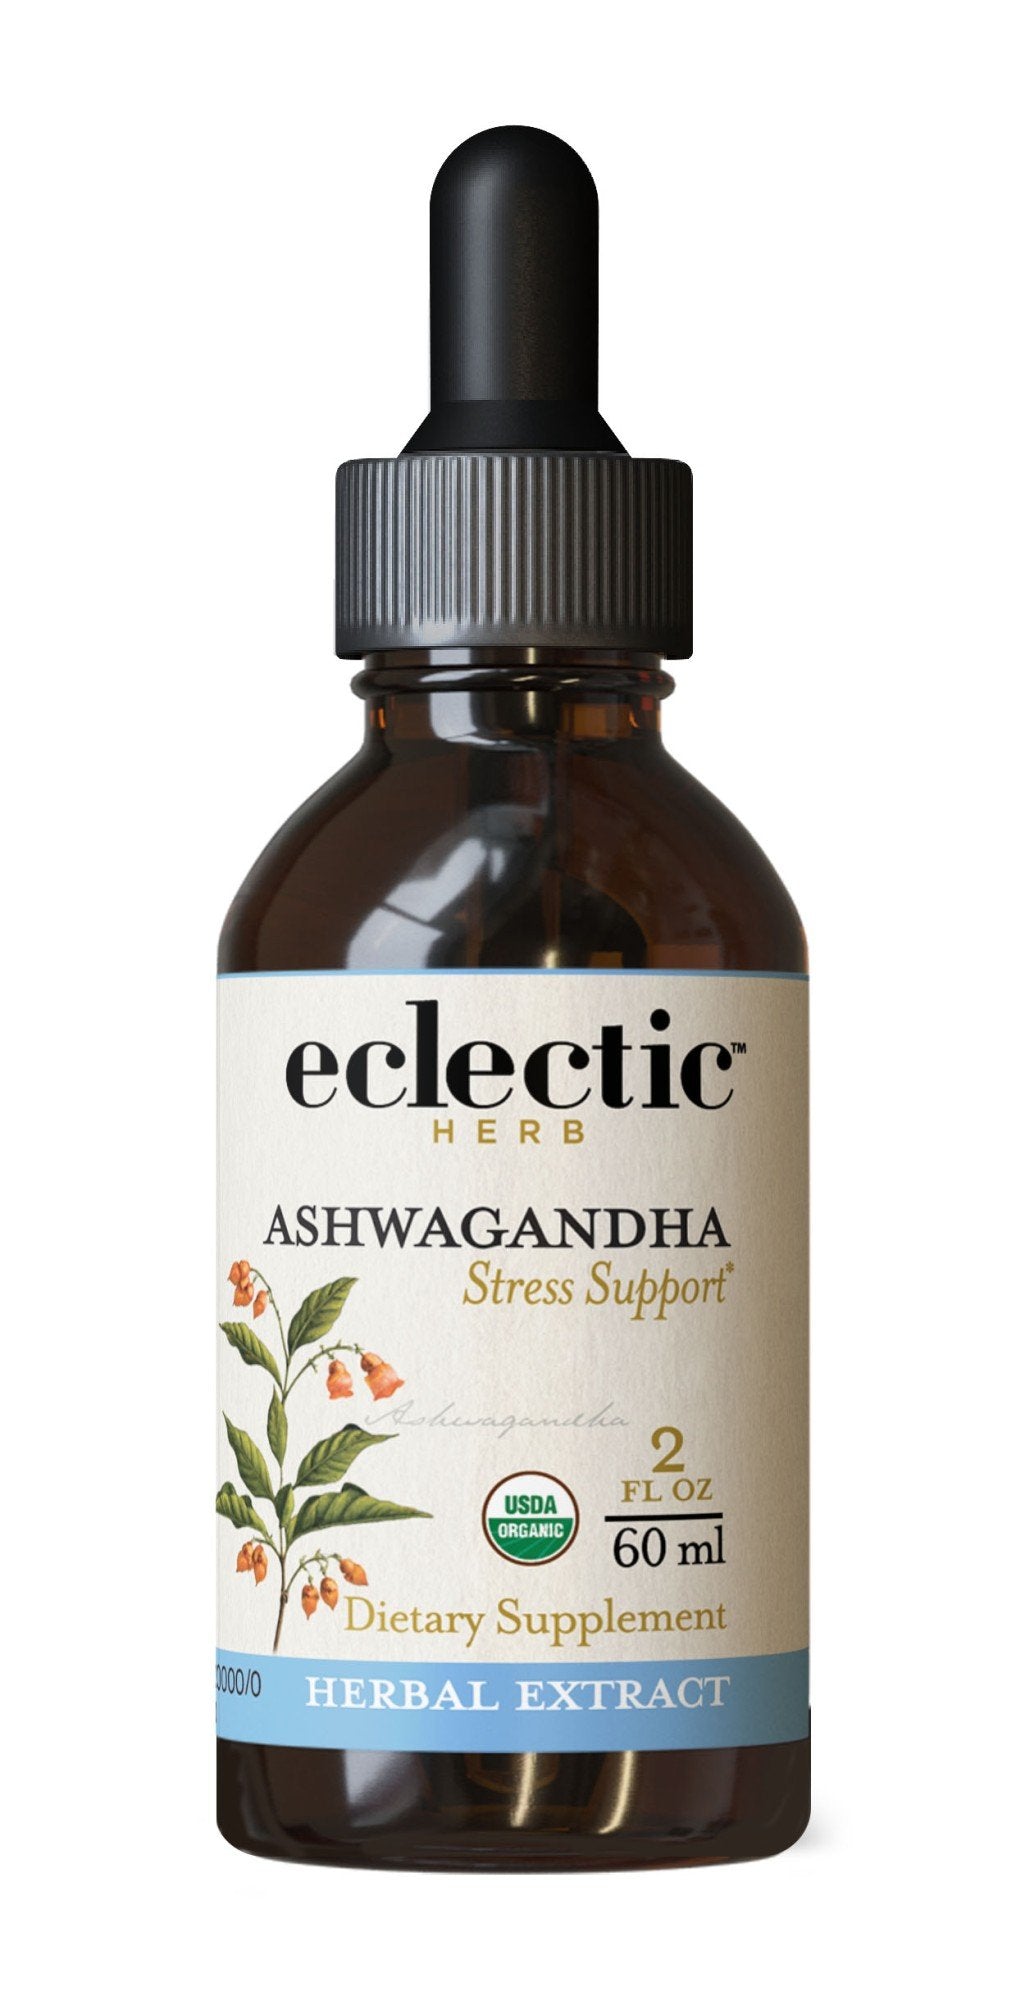 Eclectic Herb Ashwagandha Extract 2 oz Liquid